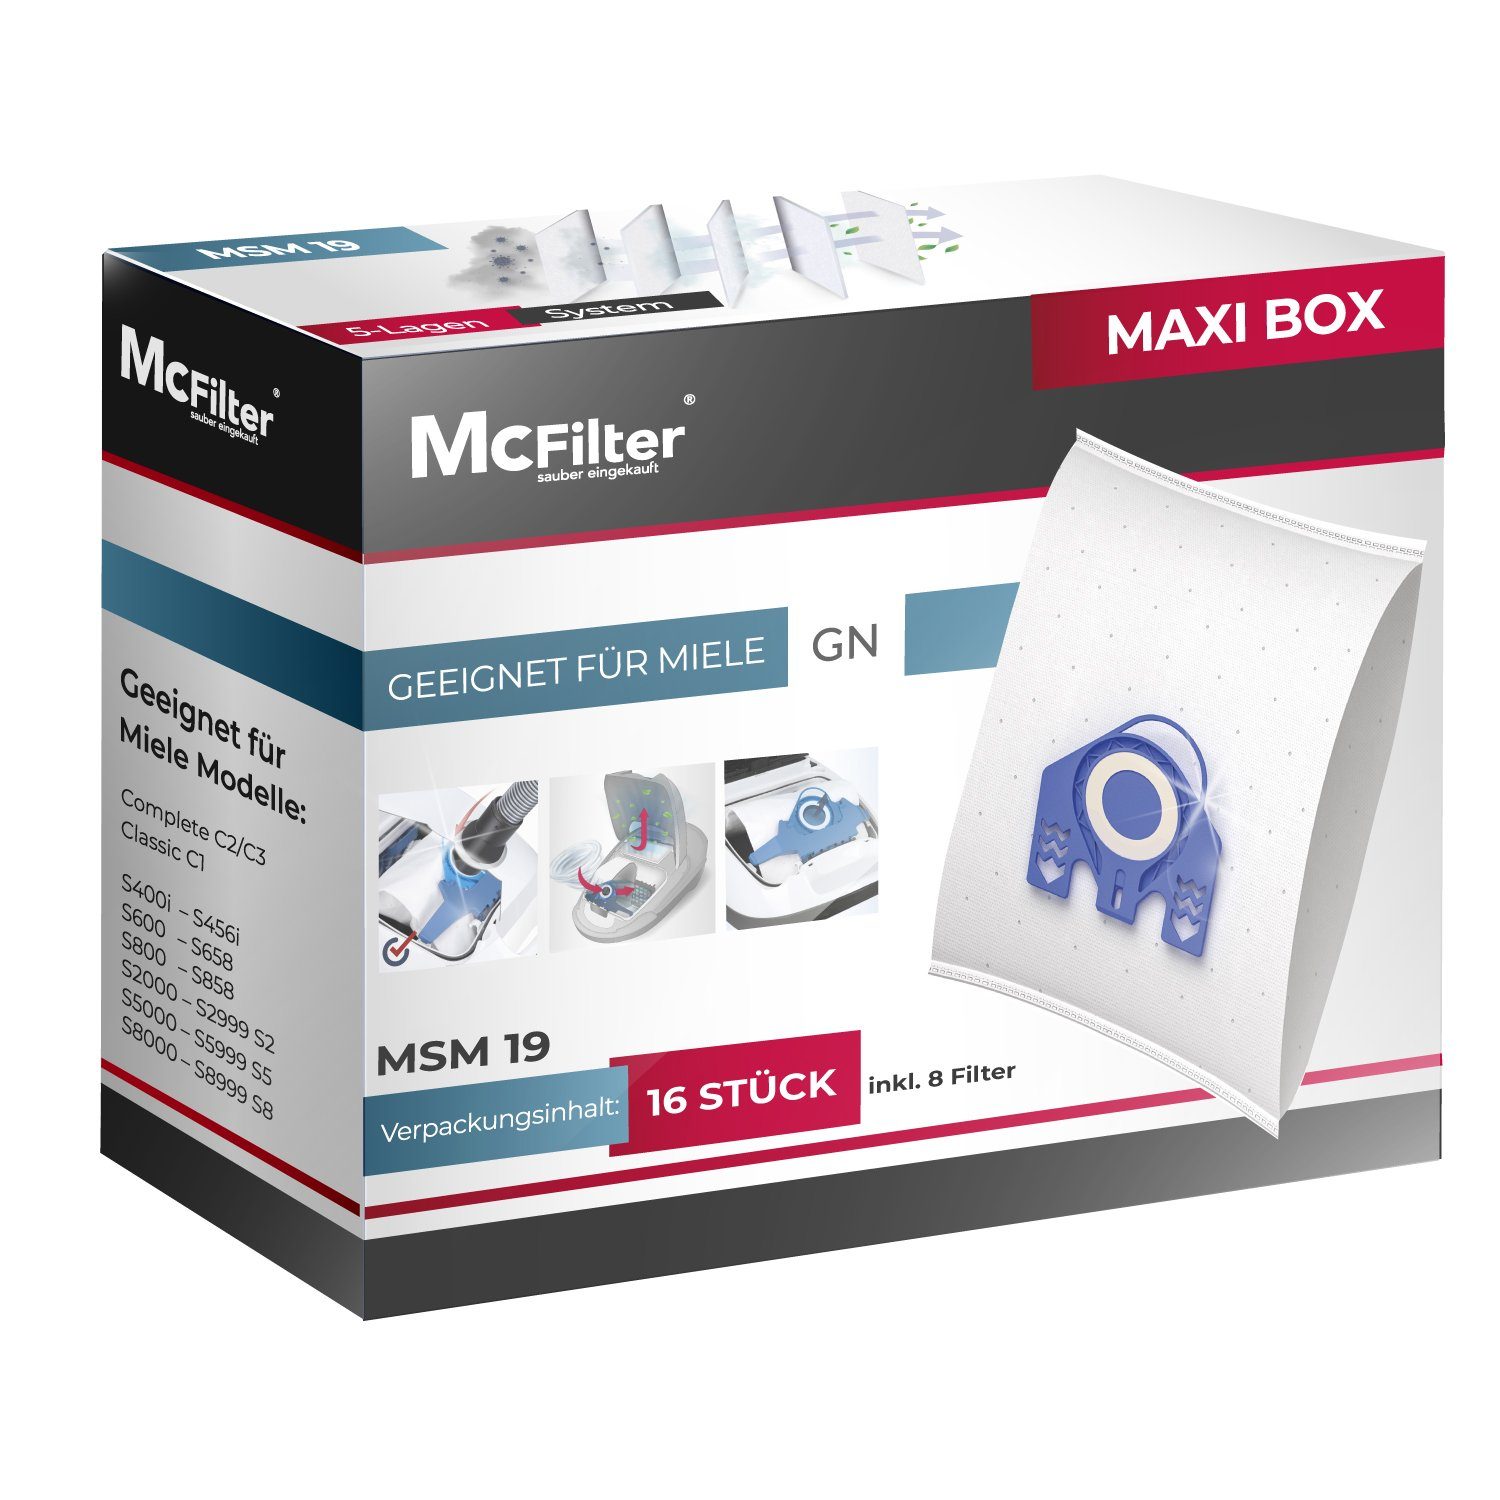 McFilter Staubsaugerbeutel >MAXI BOX< (16+8), passend für Miele S600 - S658 Serie Staubsauger, inkl. 8 Filter, 16 St., Top Alternative zu 9917730, wie Miele 10408410